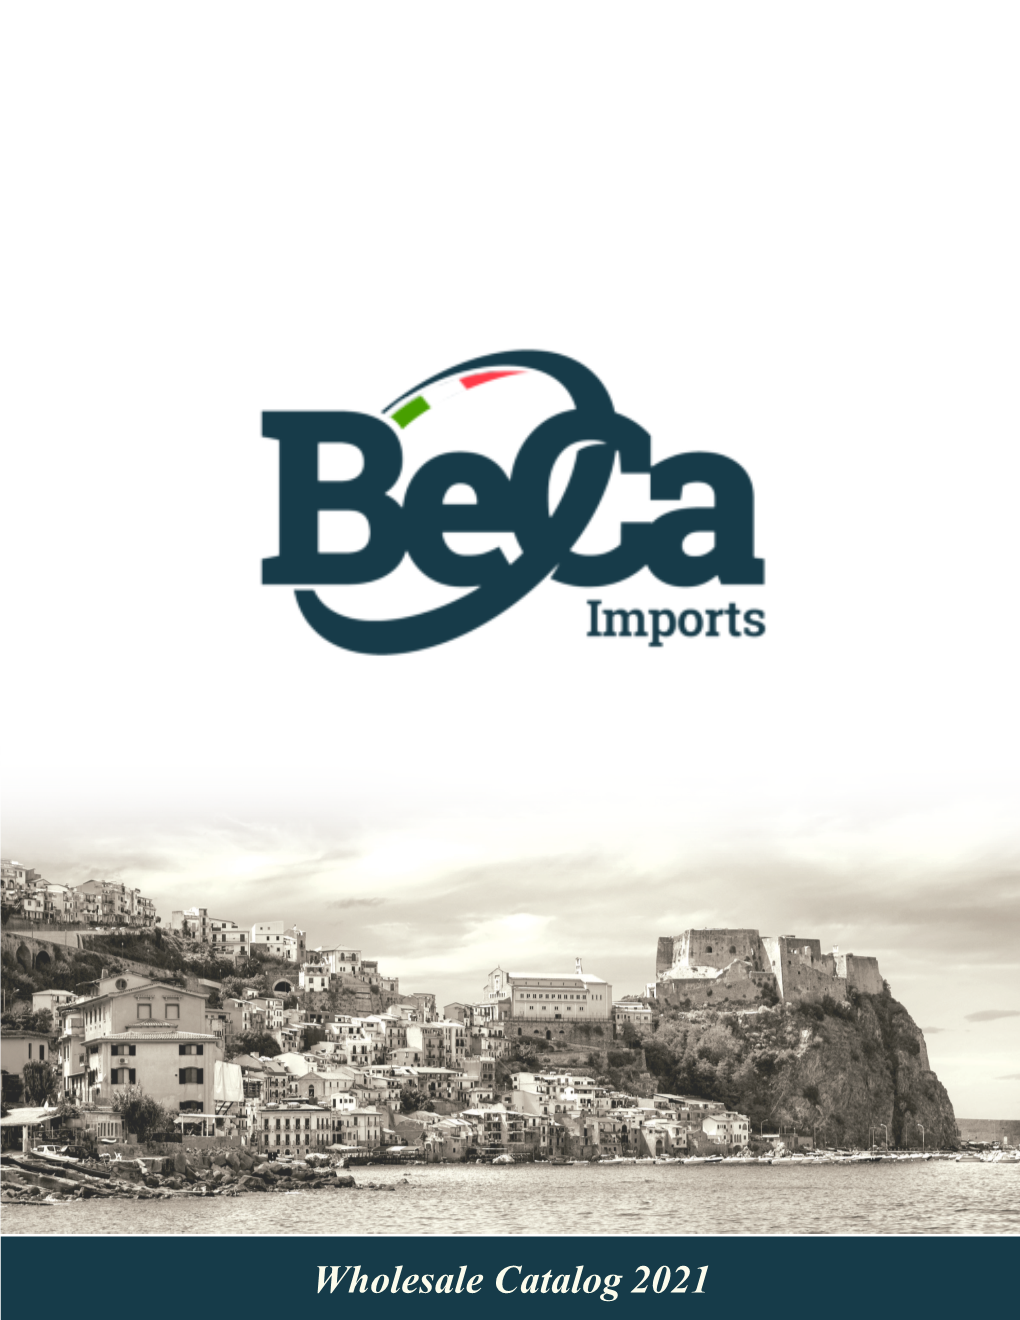 Wholesale Catalog 2021 About Beca Imports